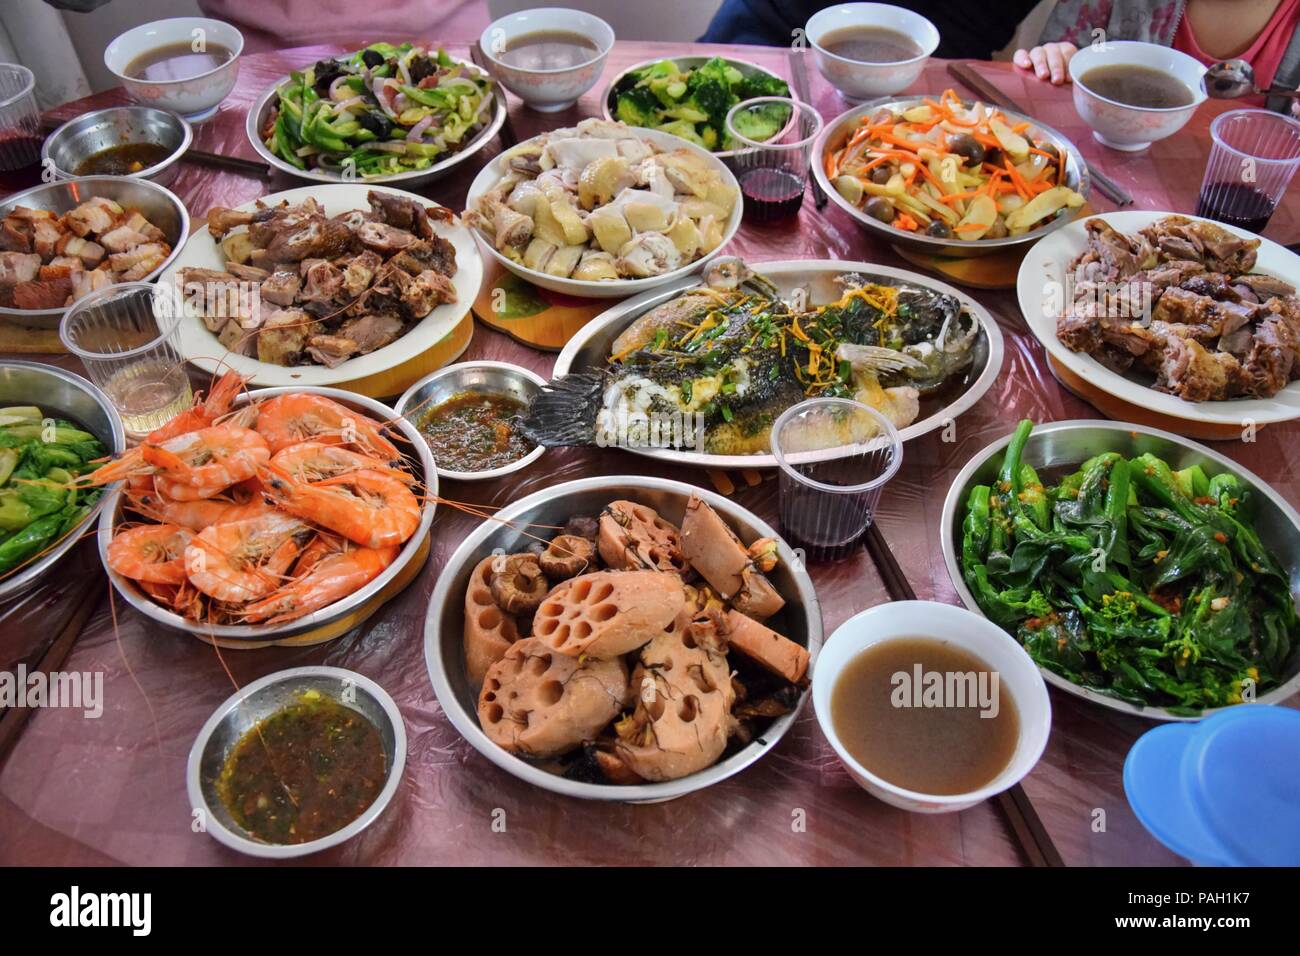 Comida china casera: 6 recetas para darte un festín oriental